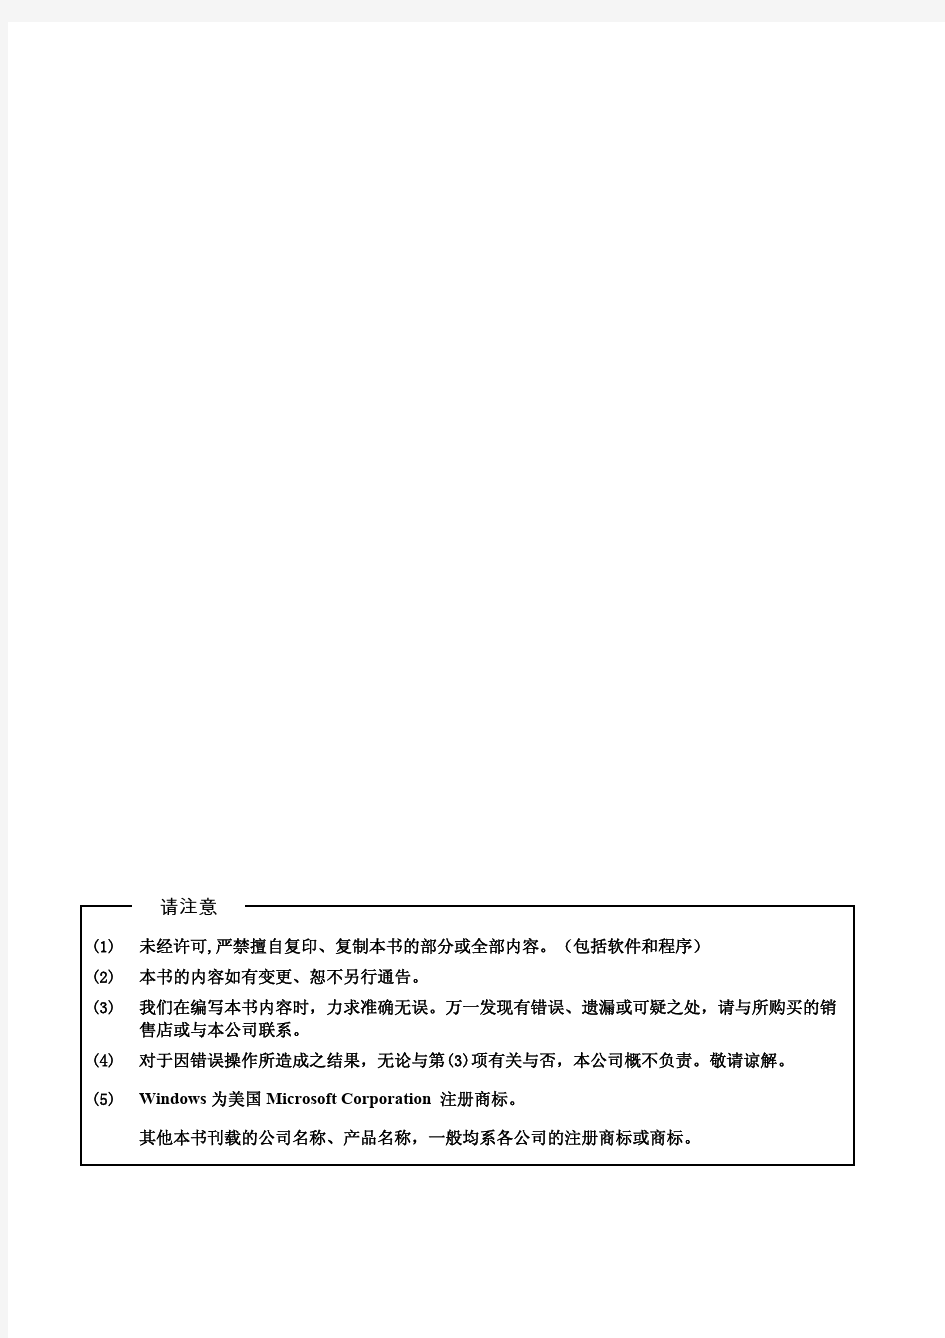 HLC_中文操作手册